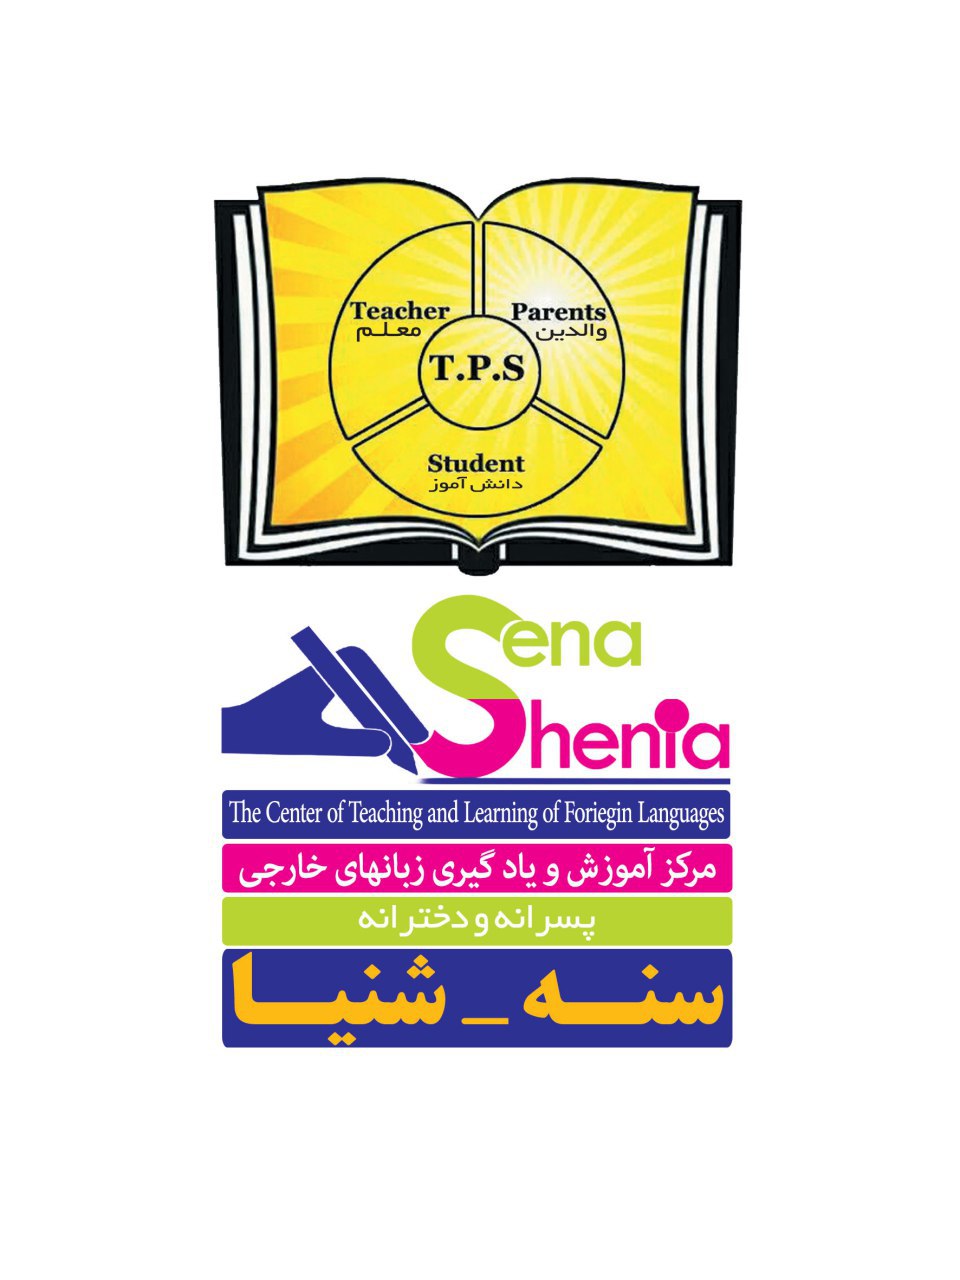 Sena and Shenia